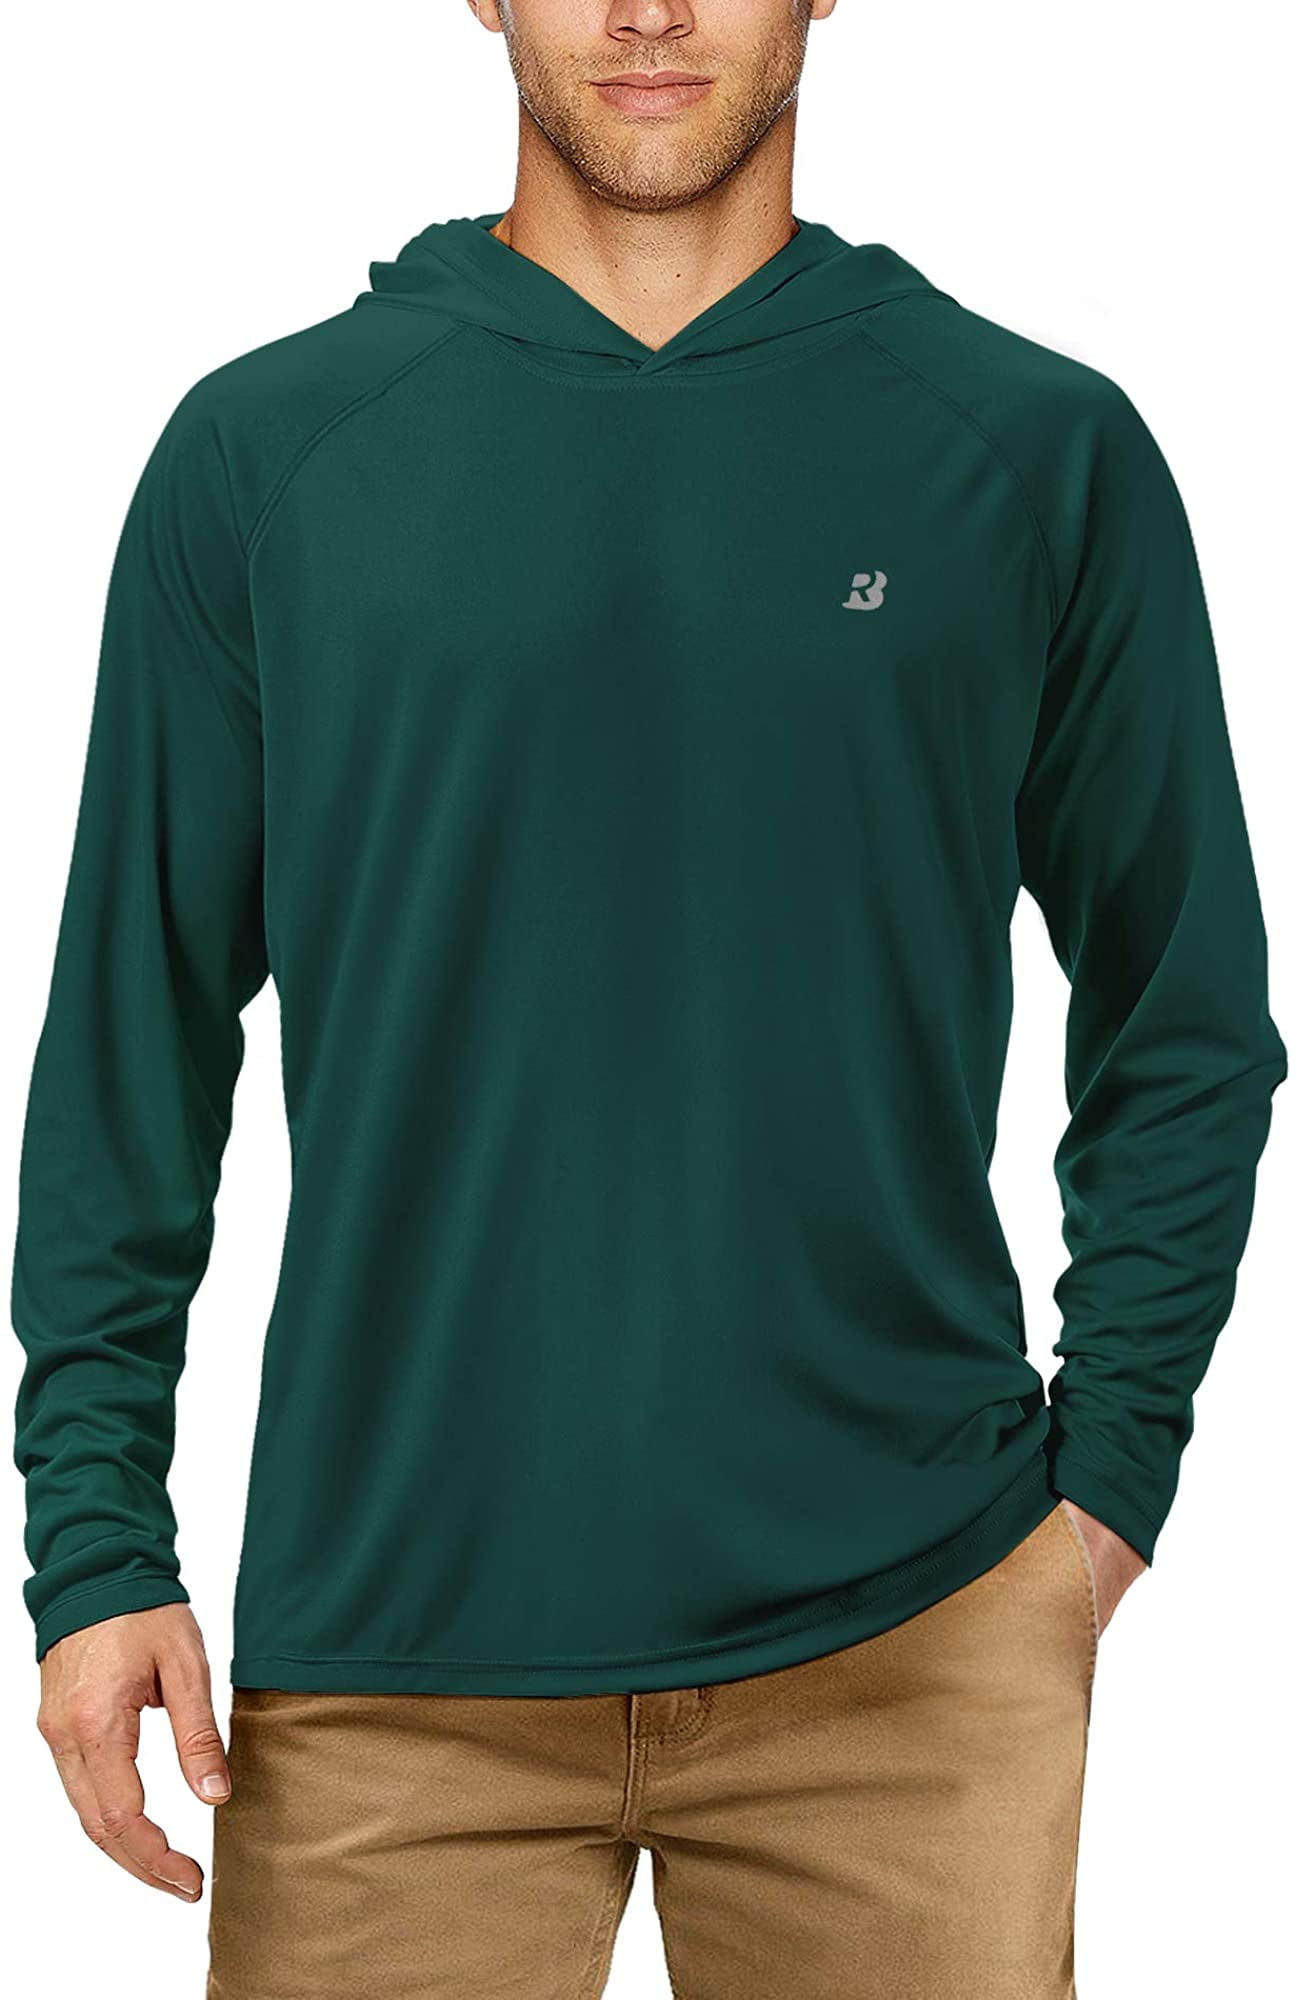 【Buy 4 Get 4th Free】Men's Long Sleeve Hooded Shirt UPF 50+ Athletic Shirts, Emerald Green / XXL